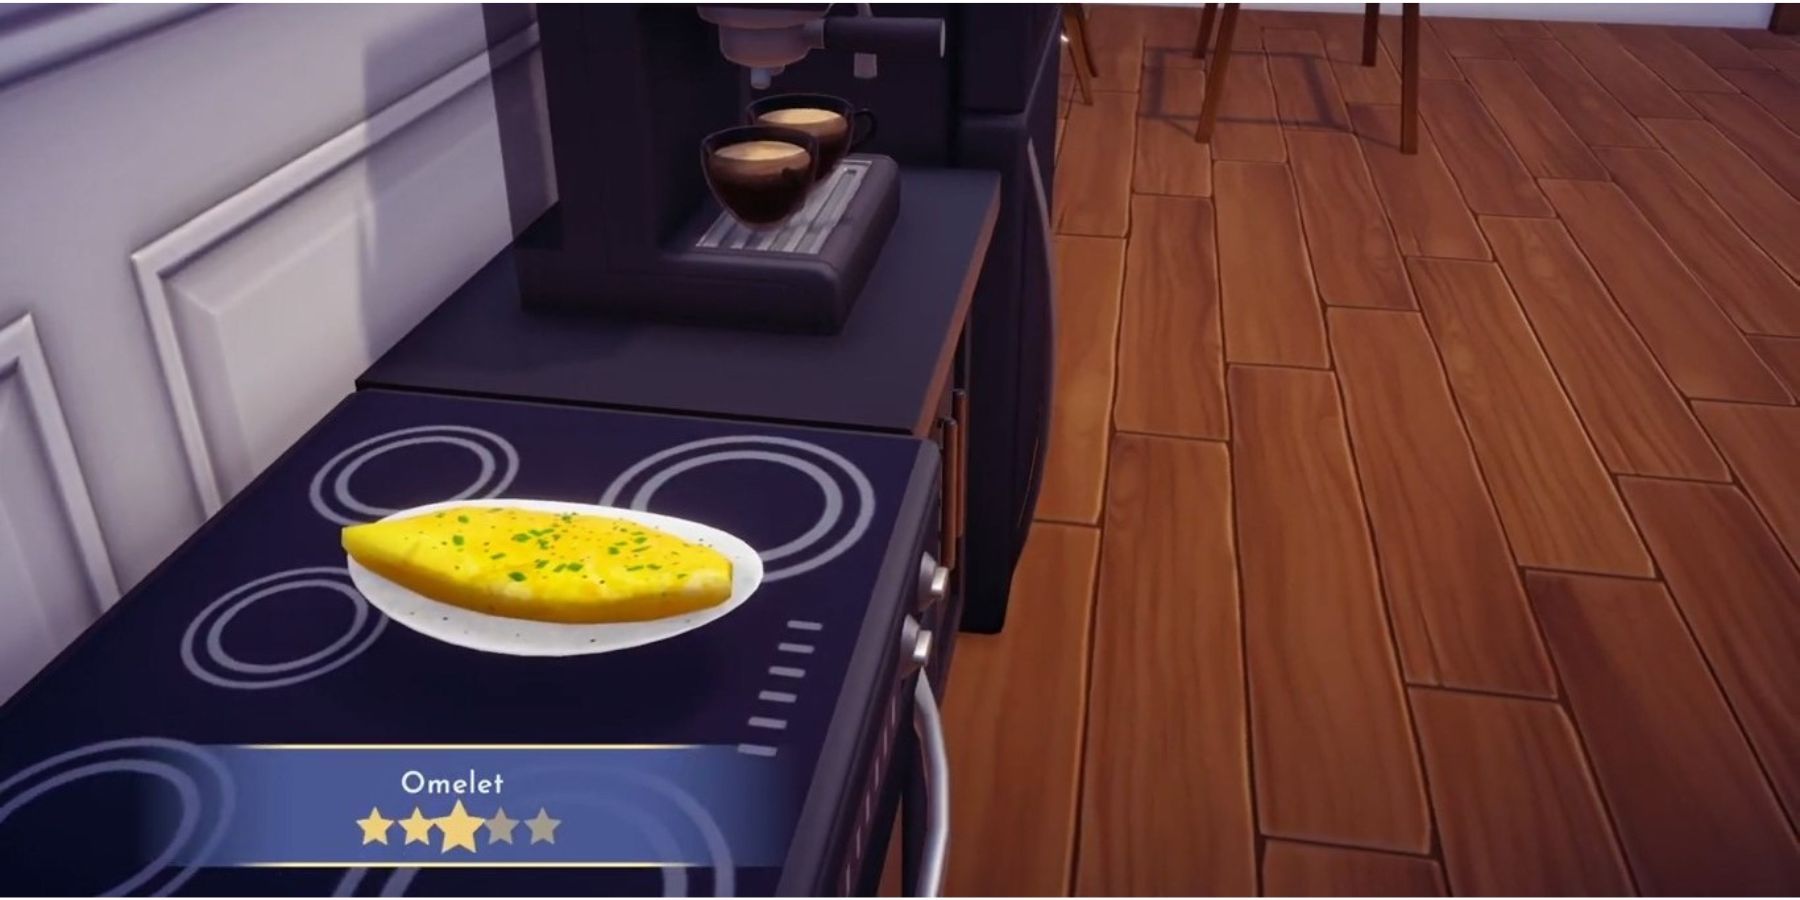 omelet recipe dreamlight valley